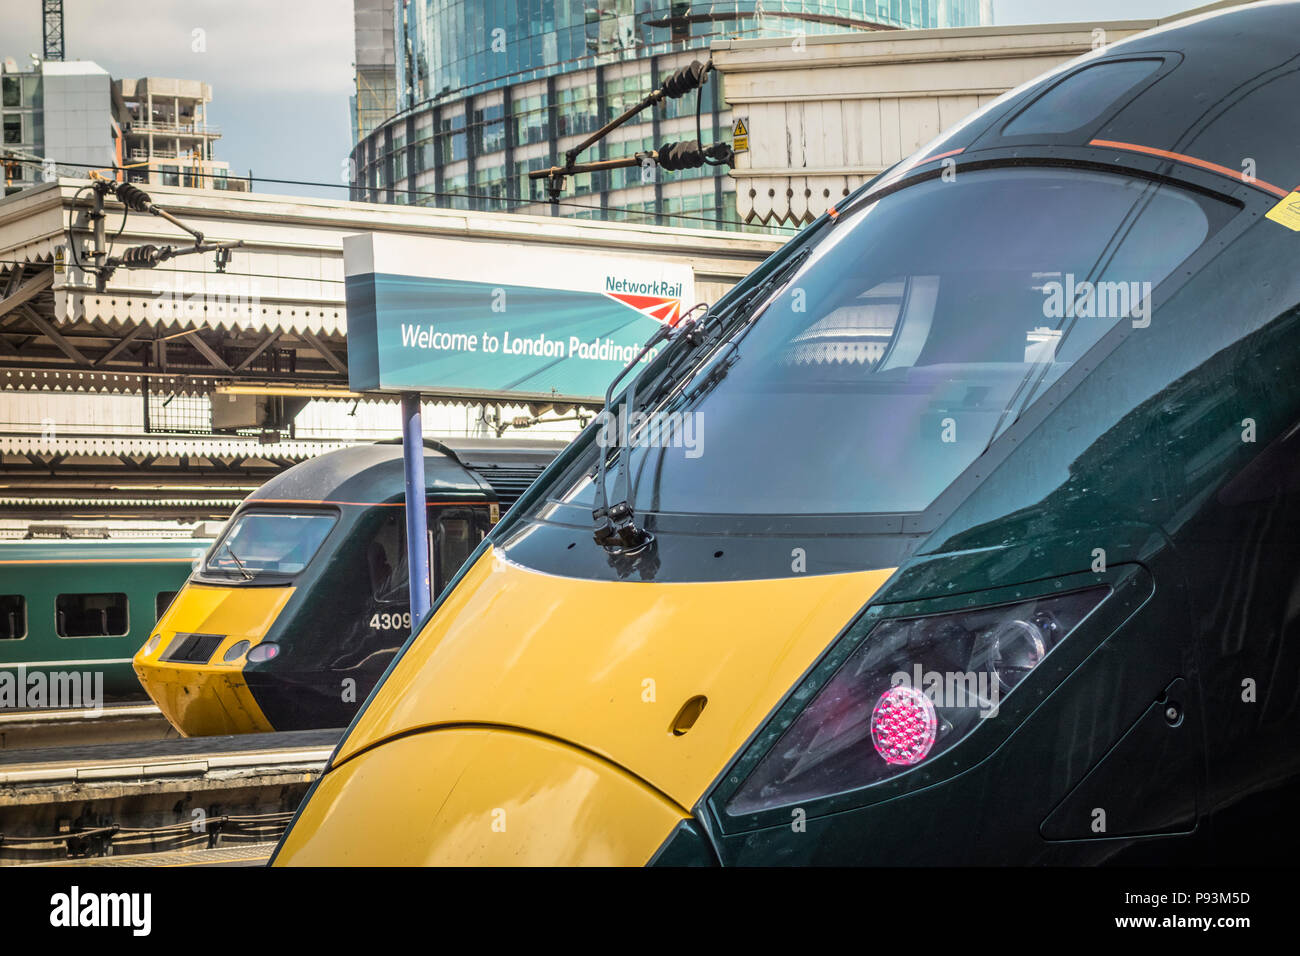 Hitachi Class 800 Intercity-Express locomotive train at Paddington Station, London, UK Stock Photo